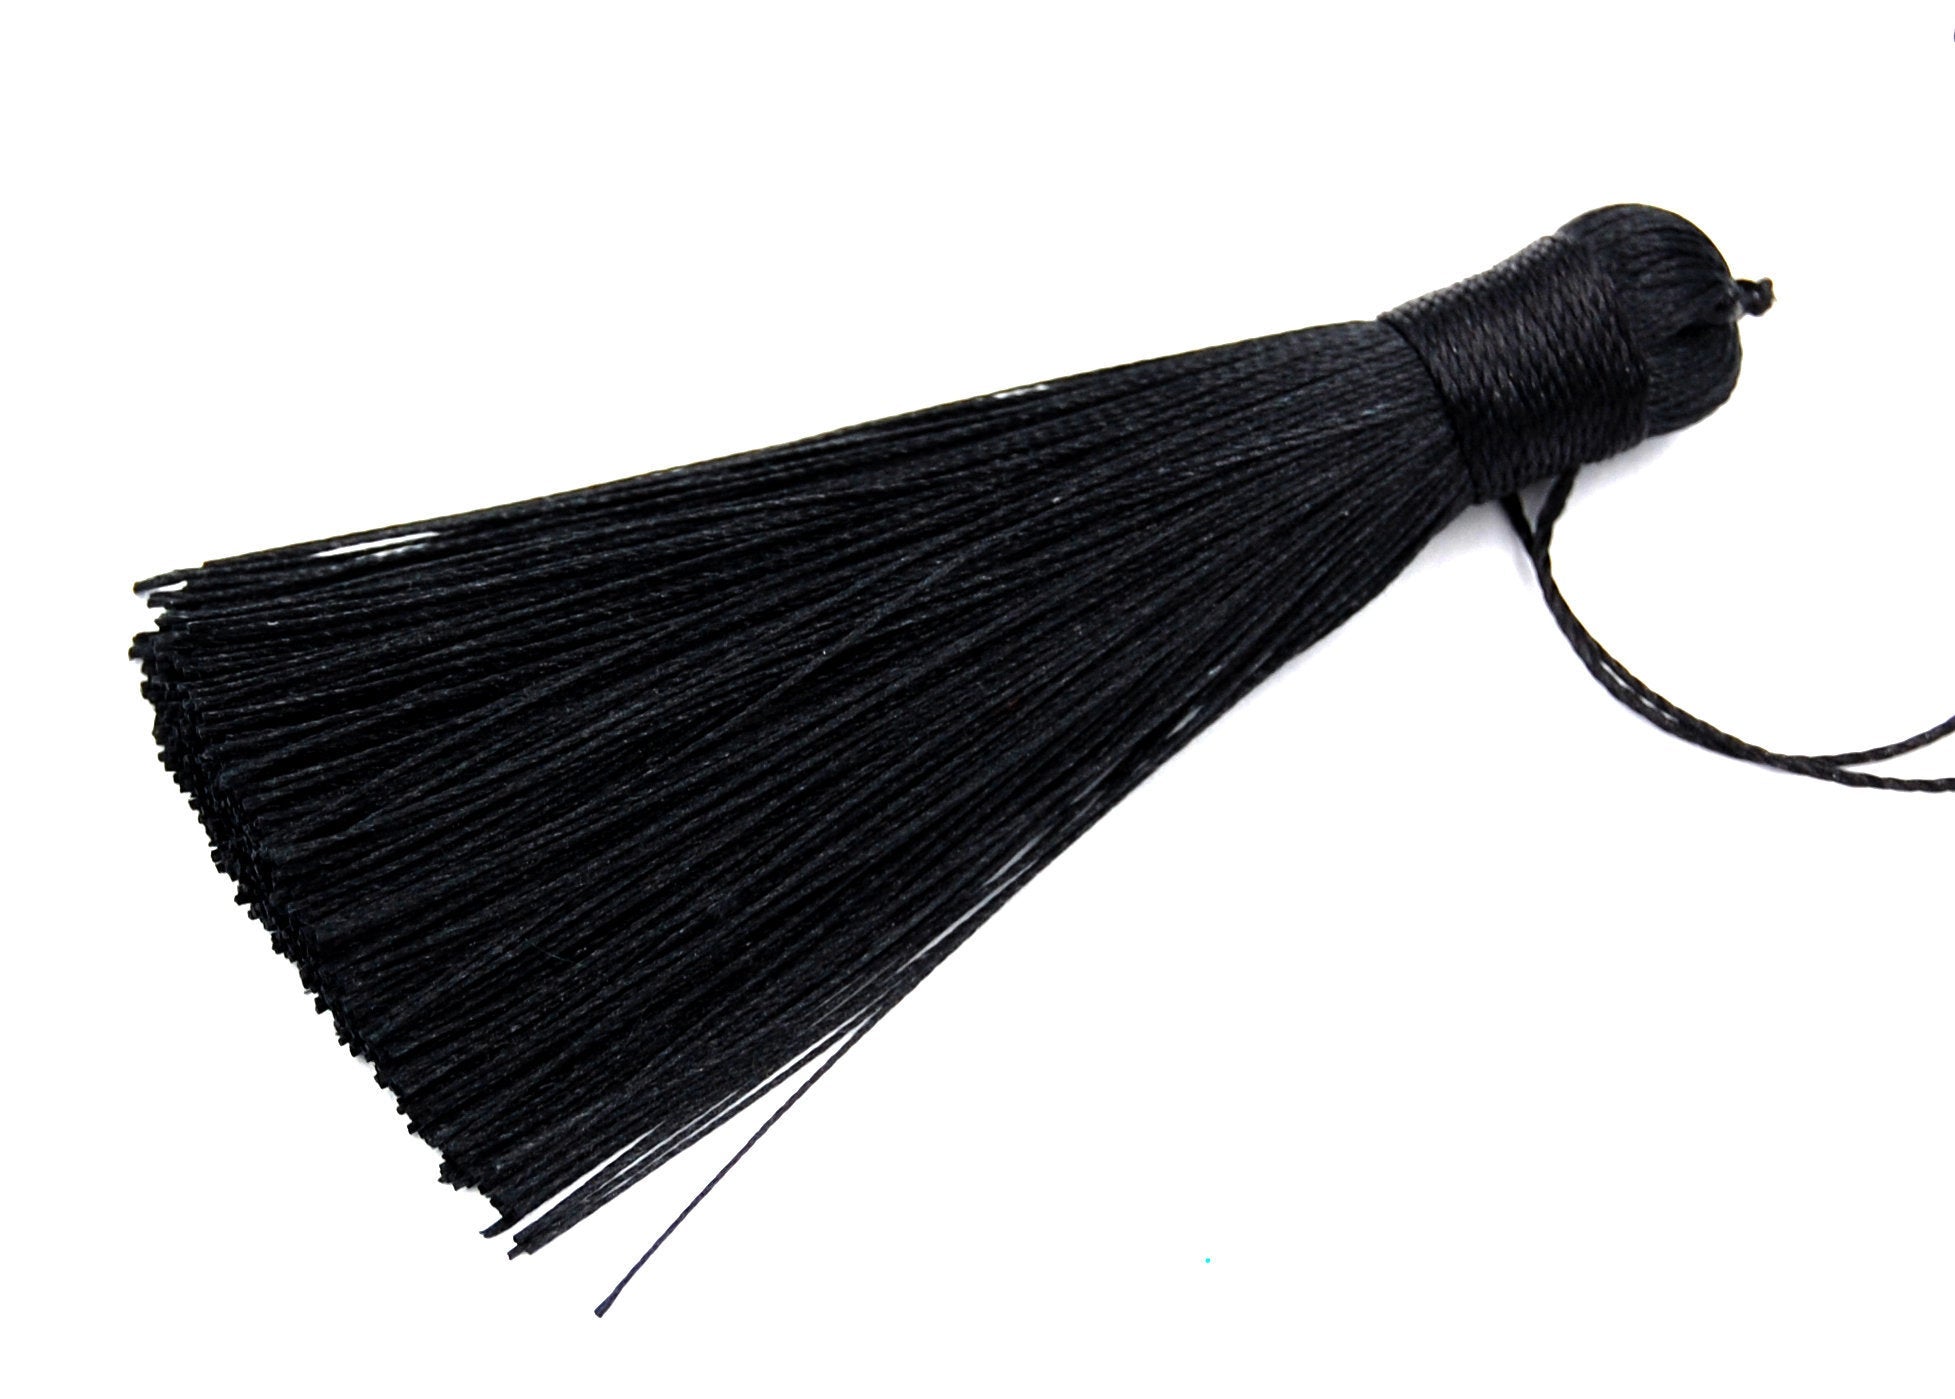 Black Tassel - 3&quot; Long Nylon Jewelry Tassel - 2pc